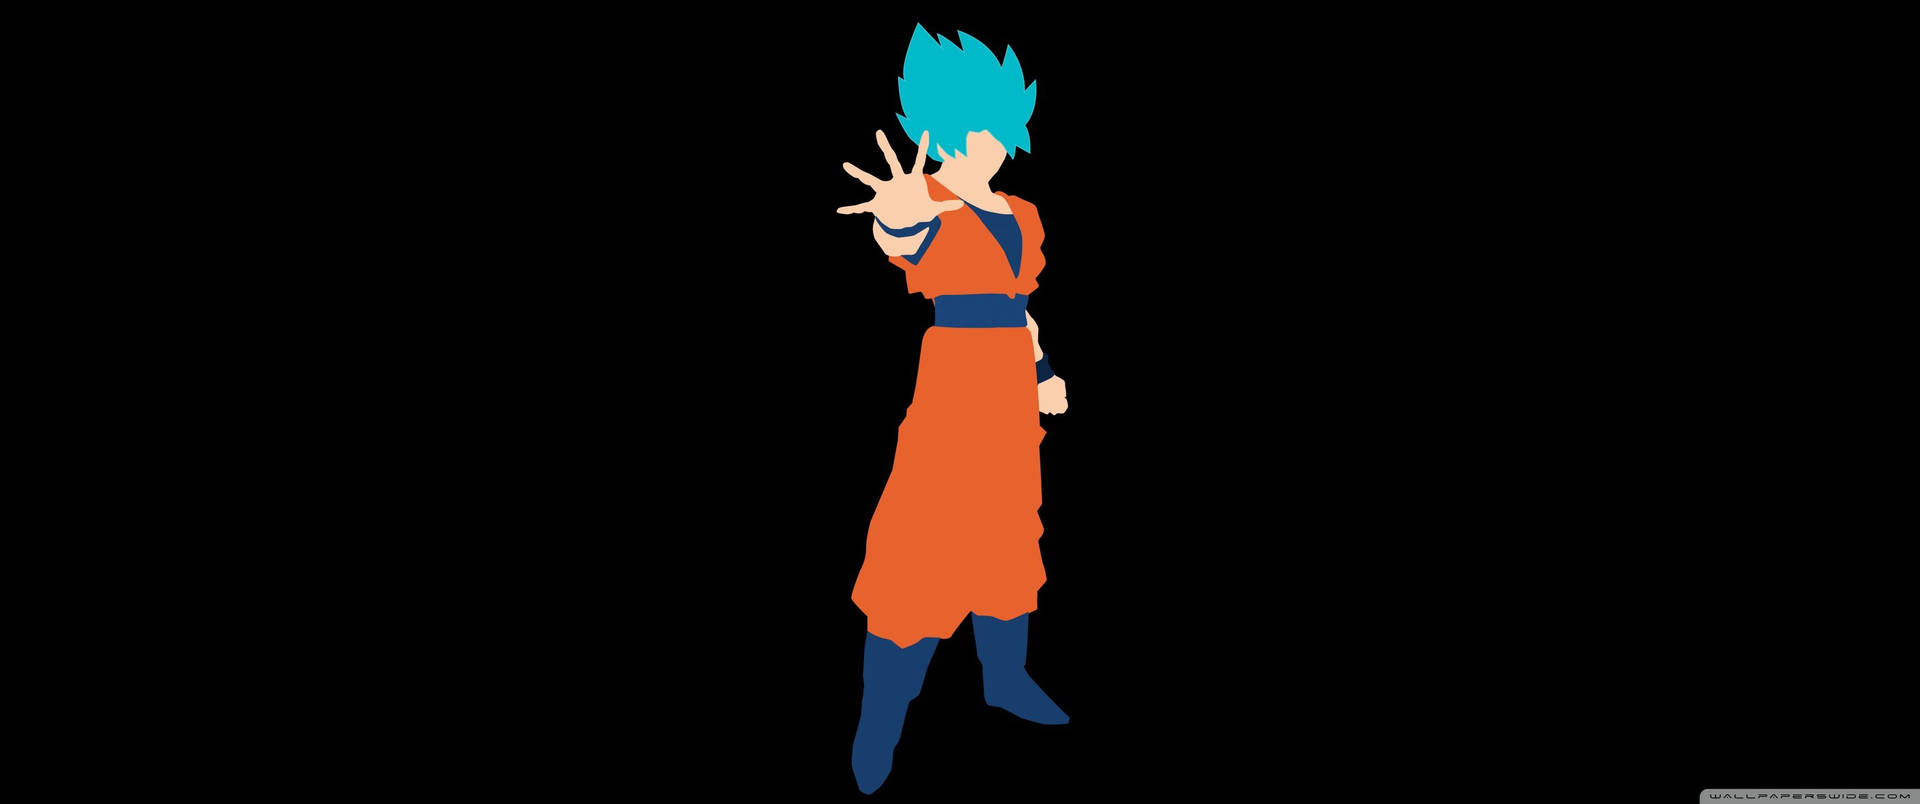 Goku Super Saiyan Blue Vector Background